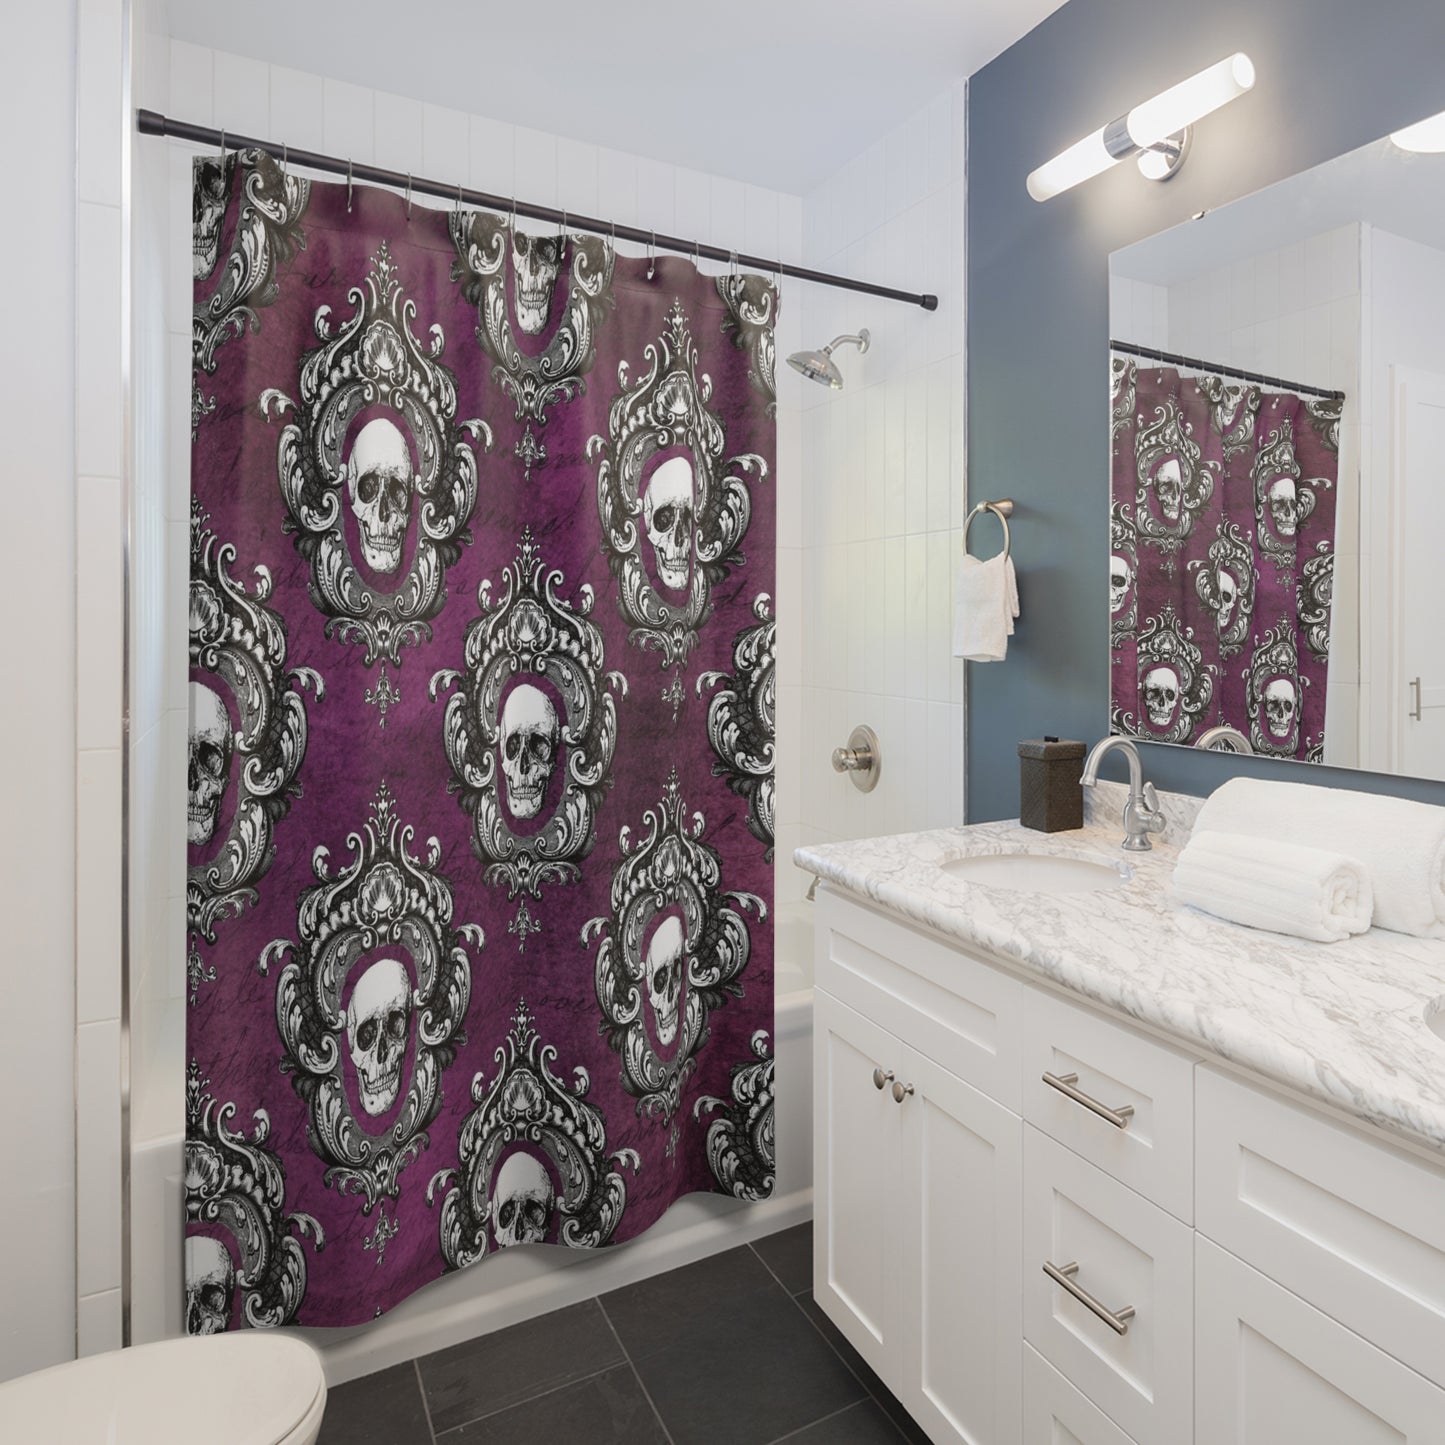 Gothic Skull Dark Academia Ornate Frame, Purple Glam Goth Shower Curtain